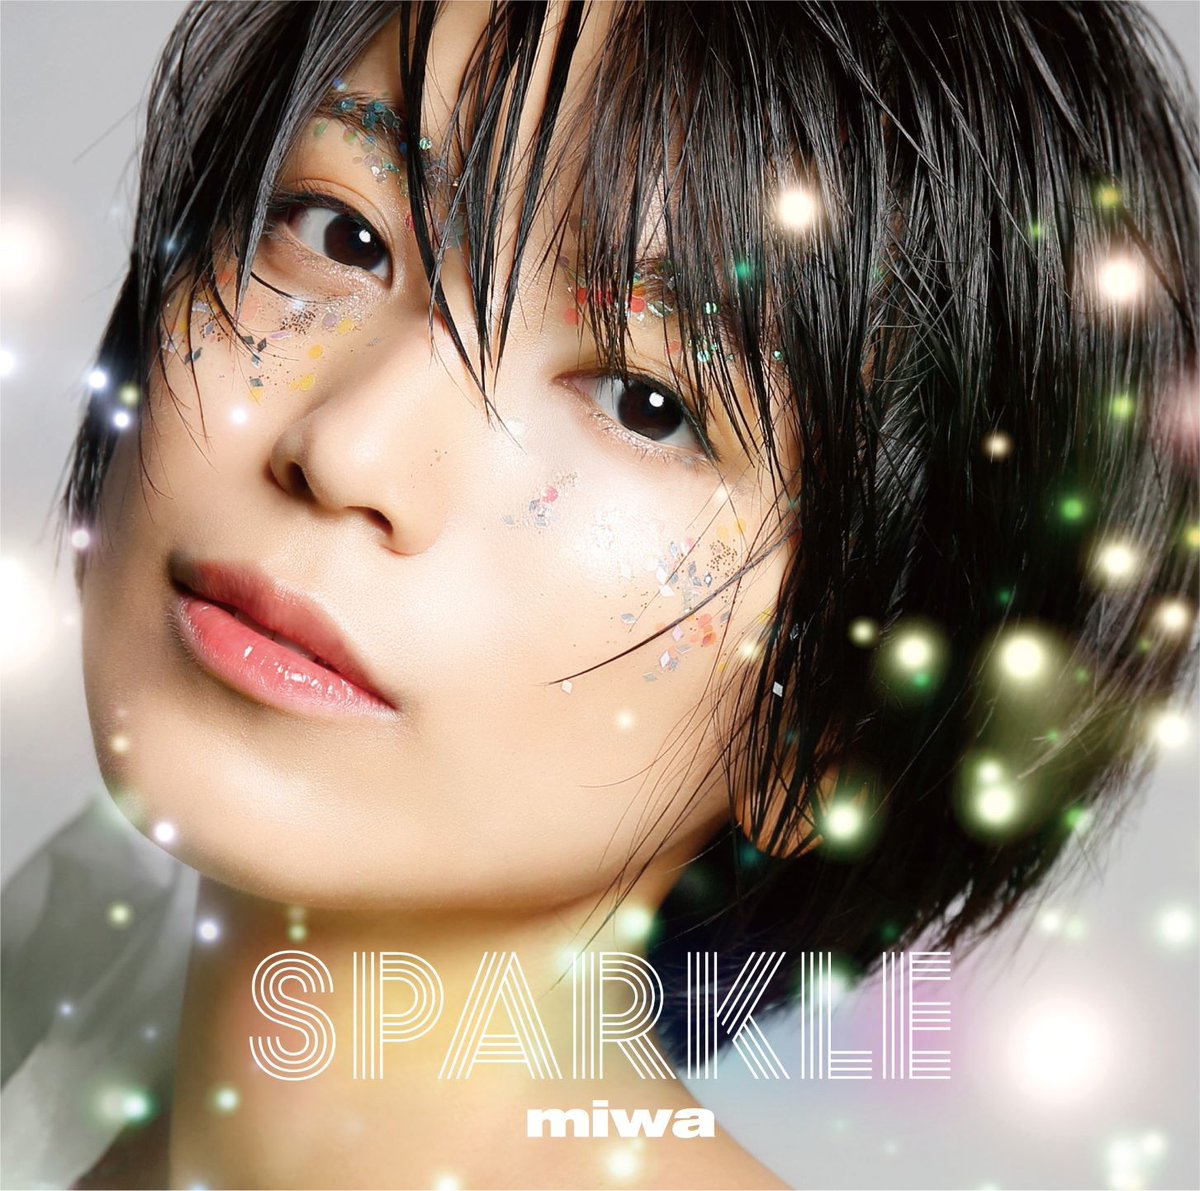 『miwa - UUU』収録の『Sparkle』ジャケット